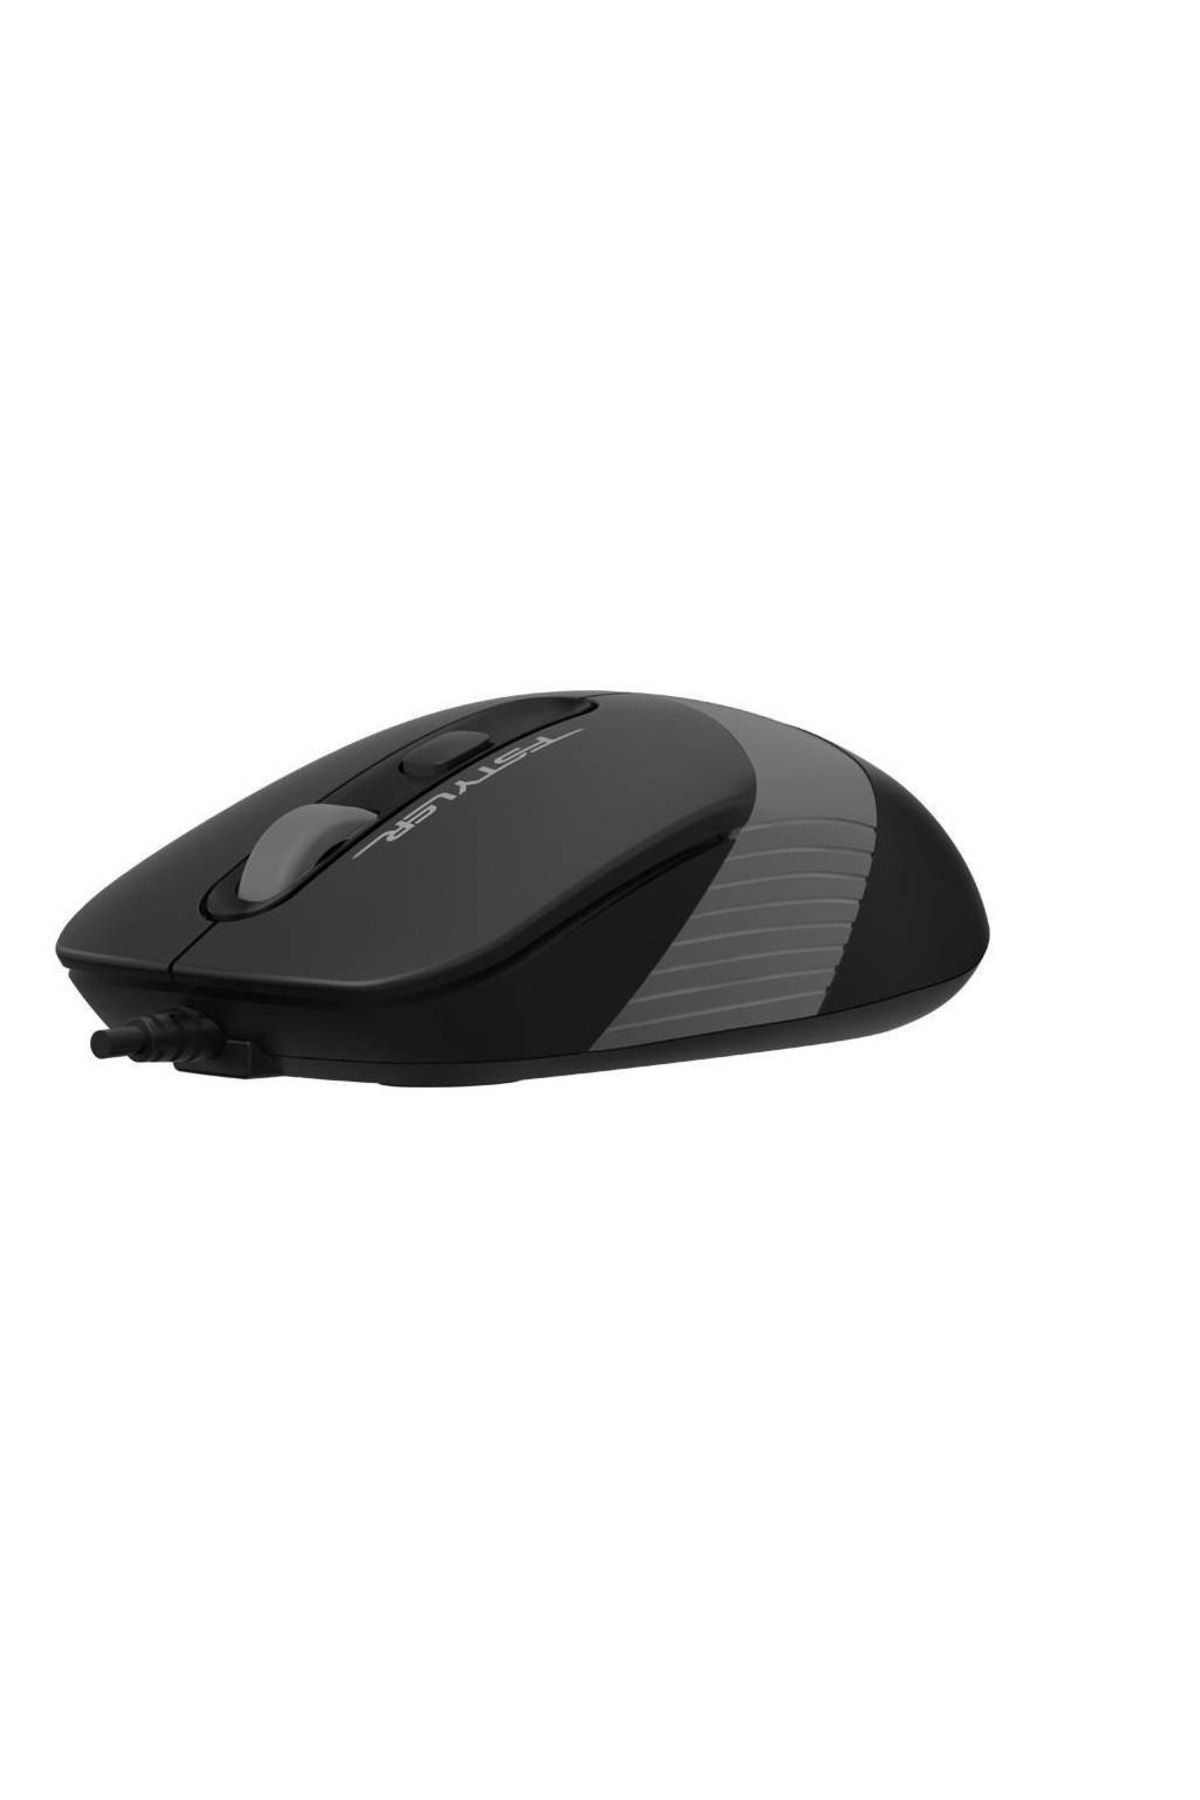 A4 Tech Fm10 Usb 1600dpi Gri Optik Mouse